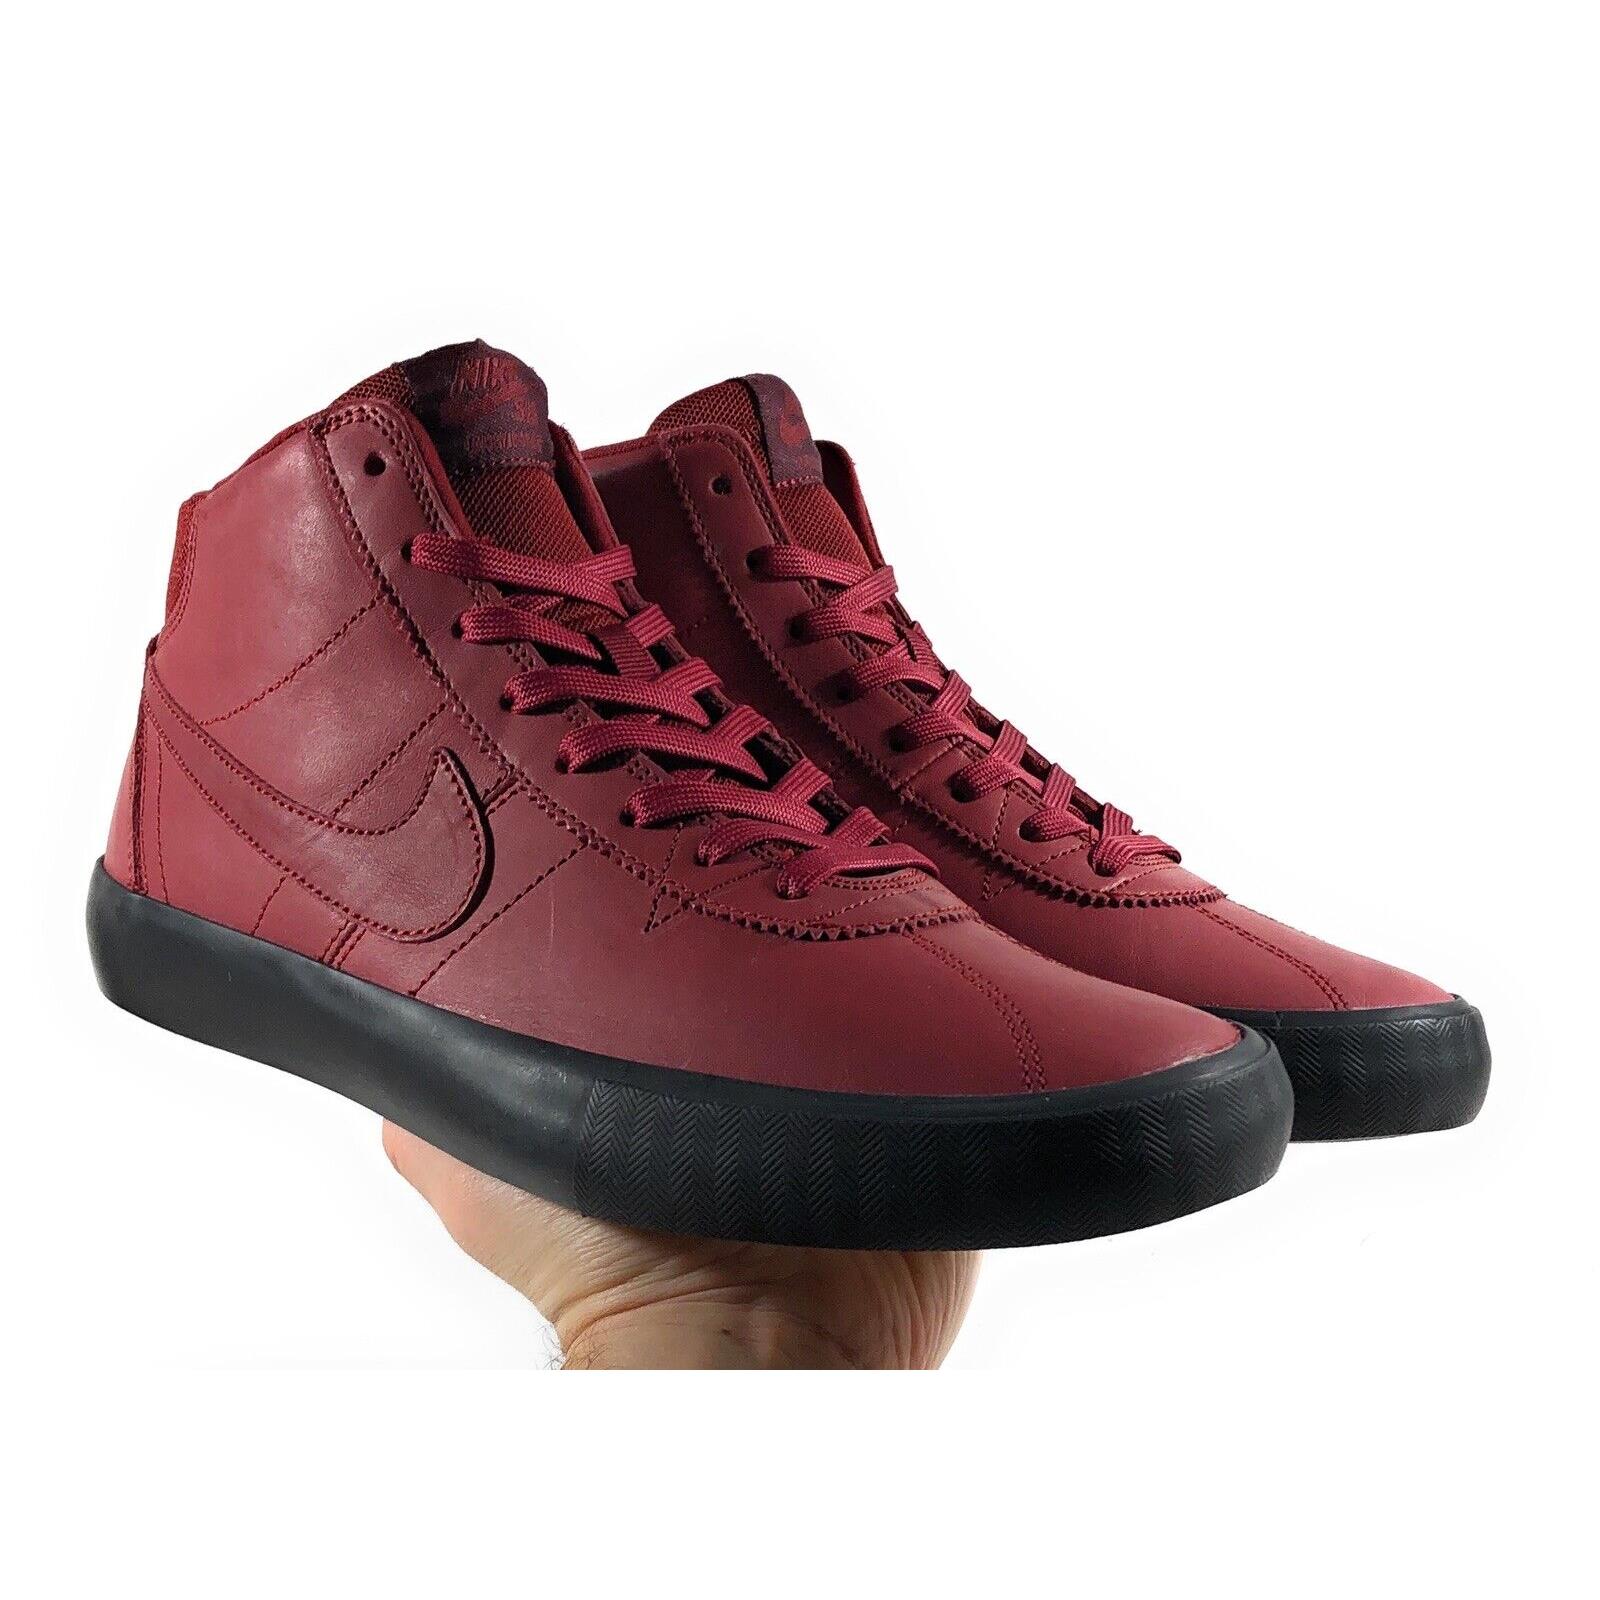 Nike shoes Bruin - Team Red, Night Maroon, Black , Team Red / Night Maroon / Black Manufacturer 1